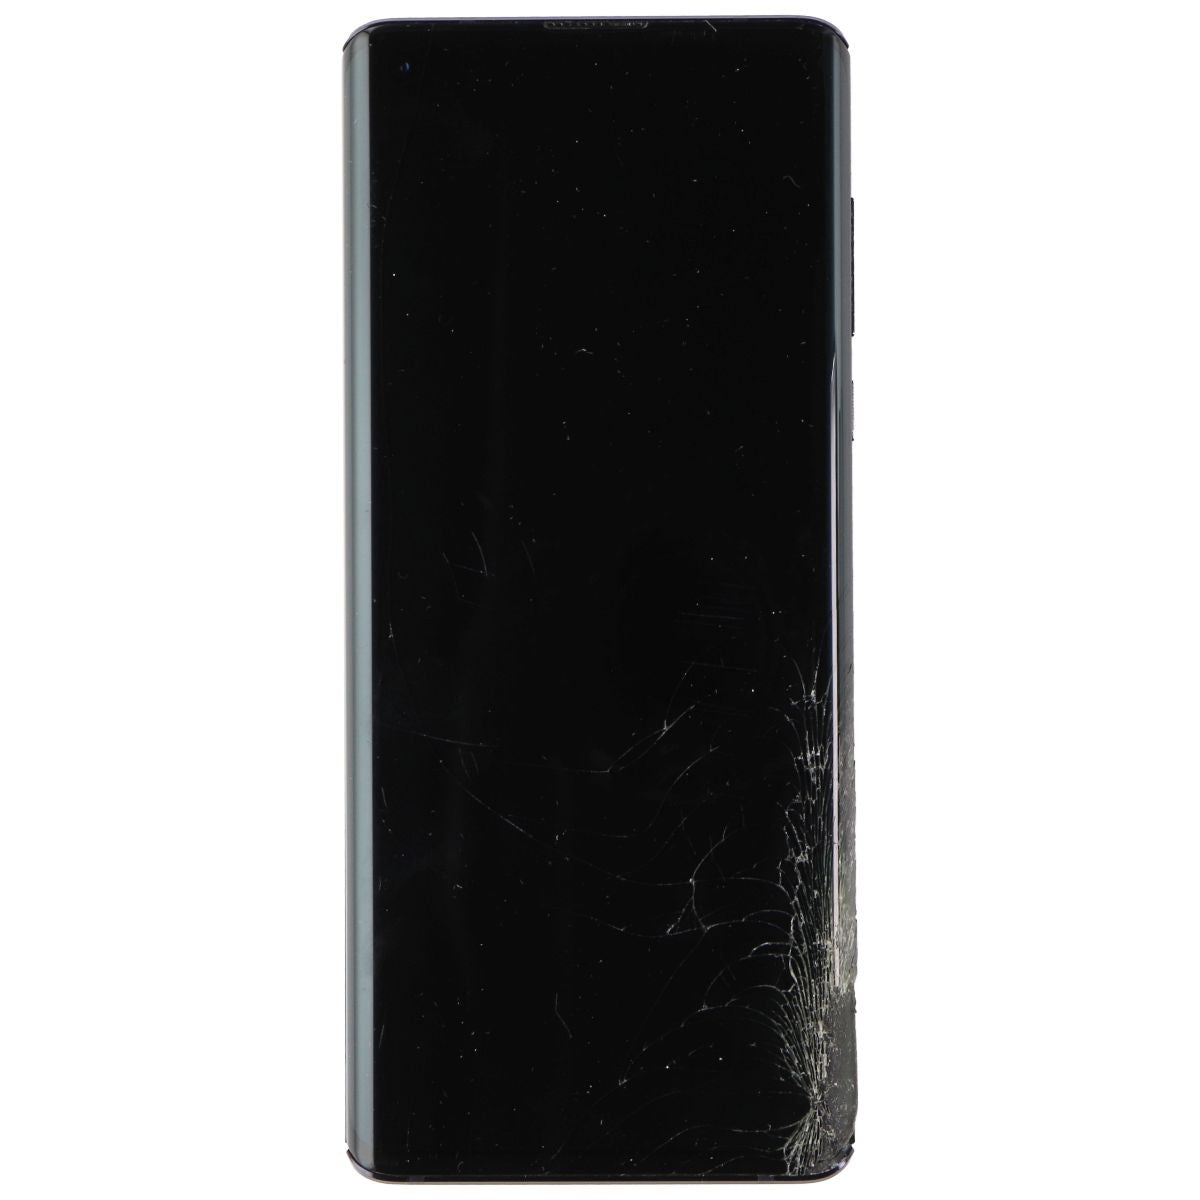 Motorola Edge (2020) 6.7-inch Smartphone (XT2063) - 128GB/Solar Black Cell Phones & Smartphones Motorola    - Simple Cell Bulk Wholesale Pricing - USA Seller